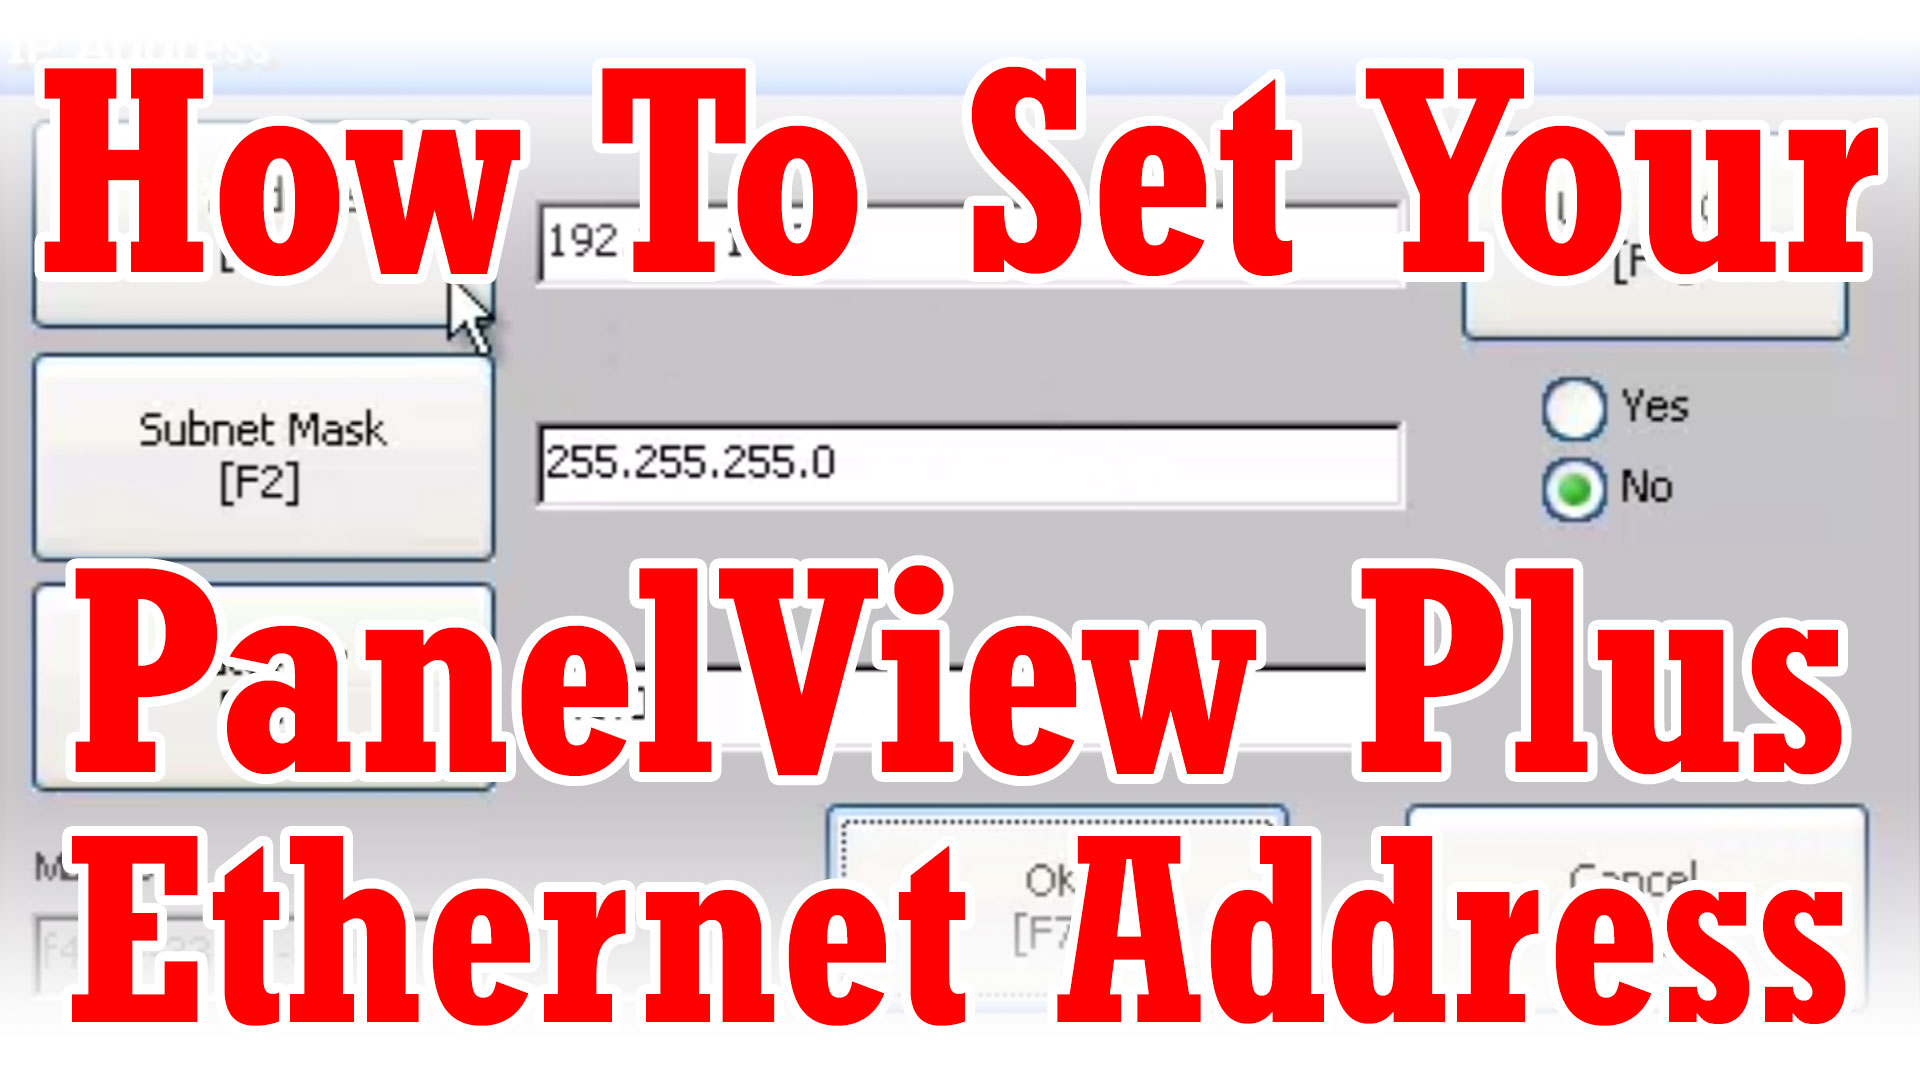 PanelView Plus - Setting Ethernet Address (M3E24)